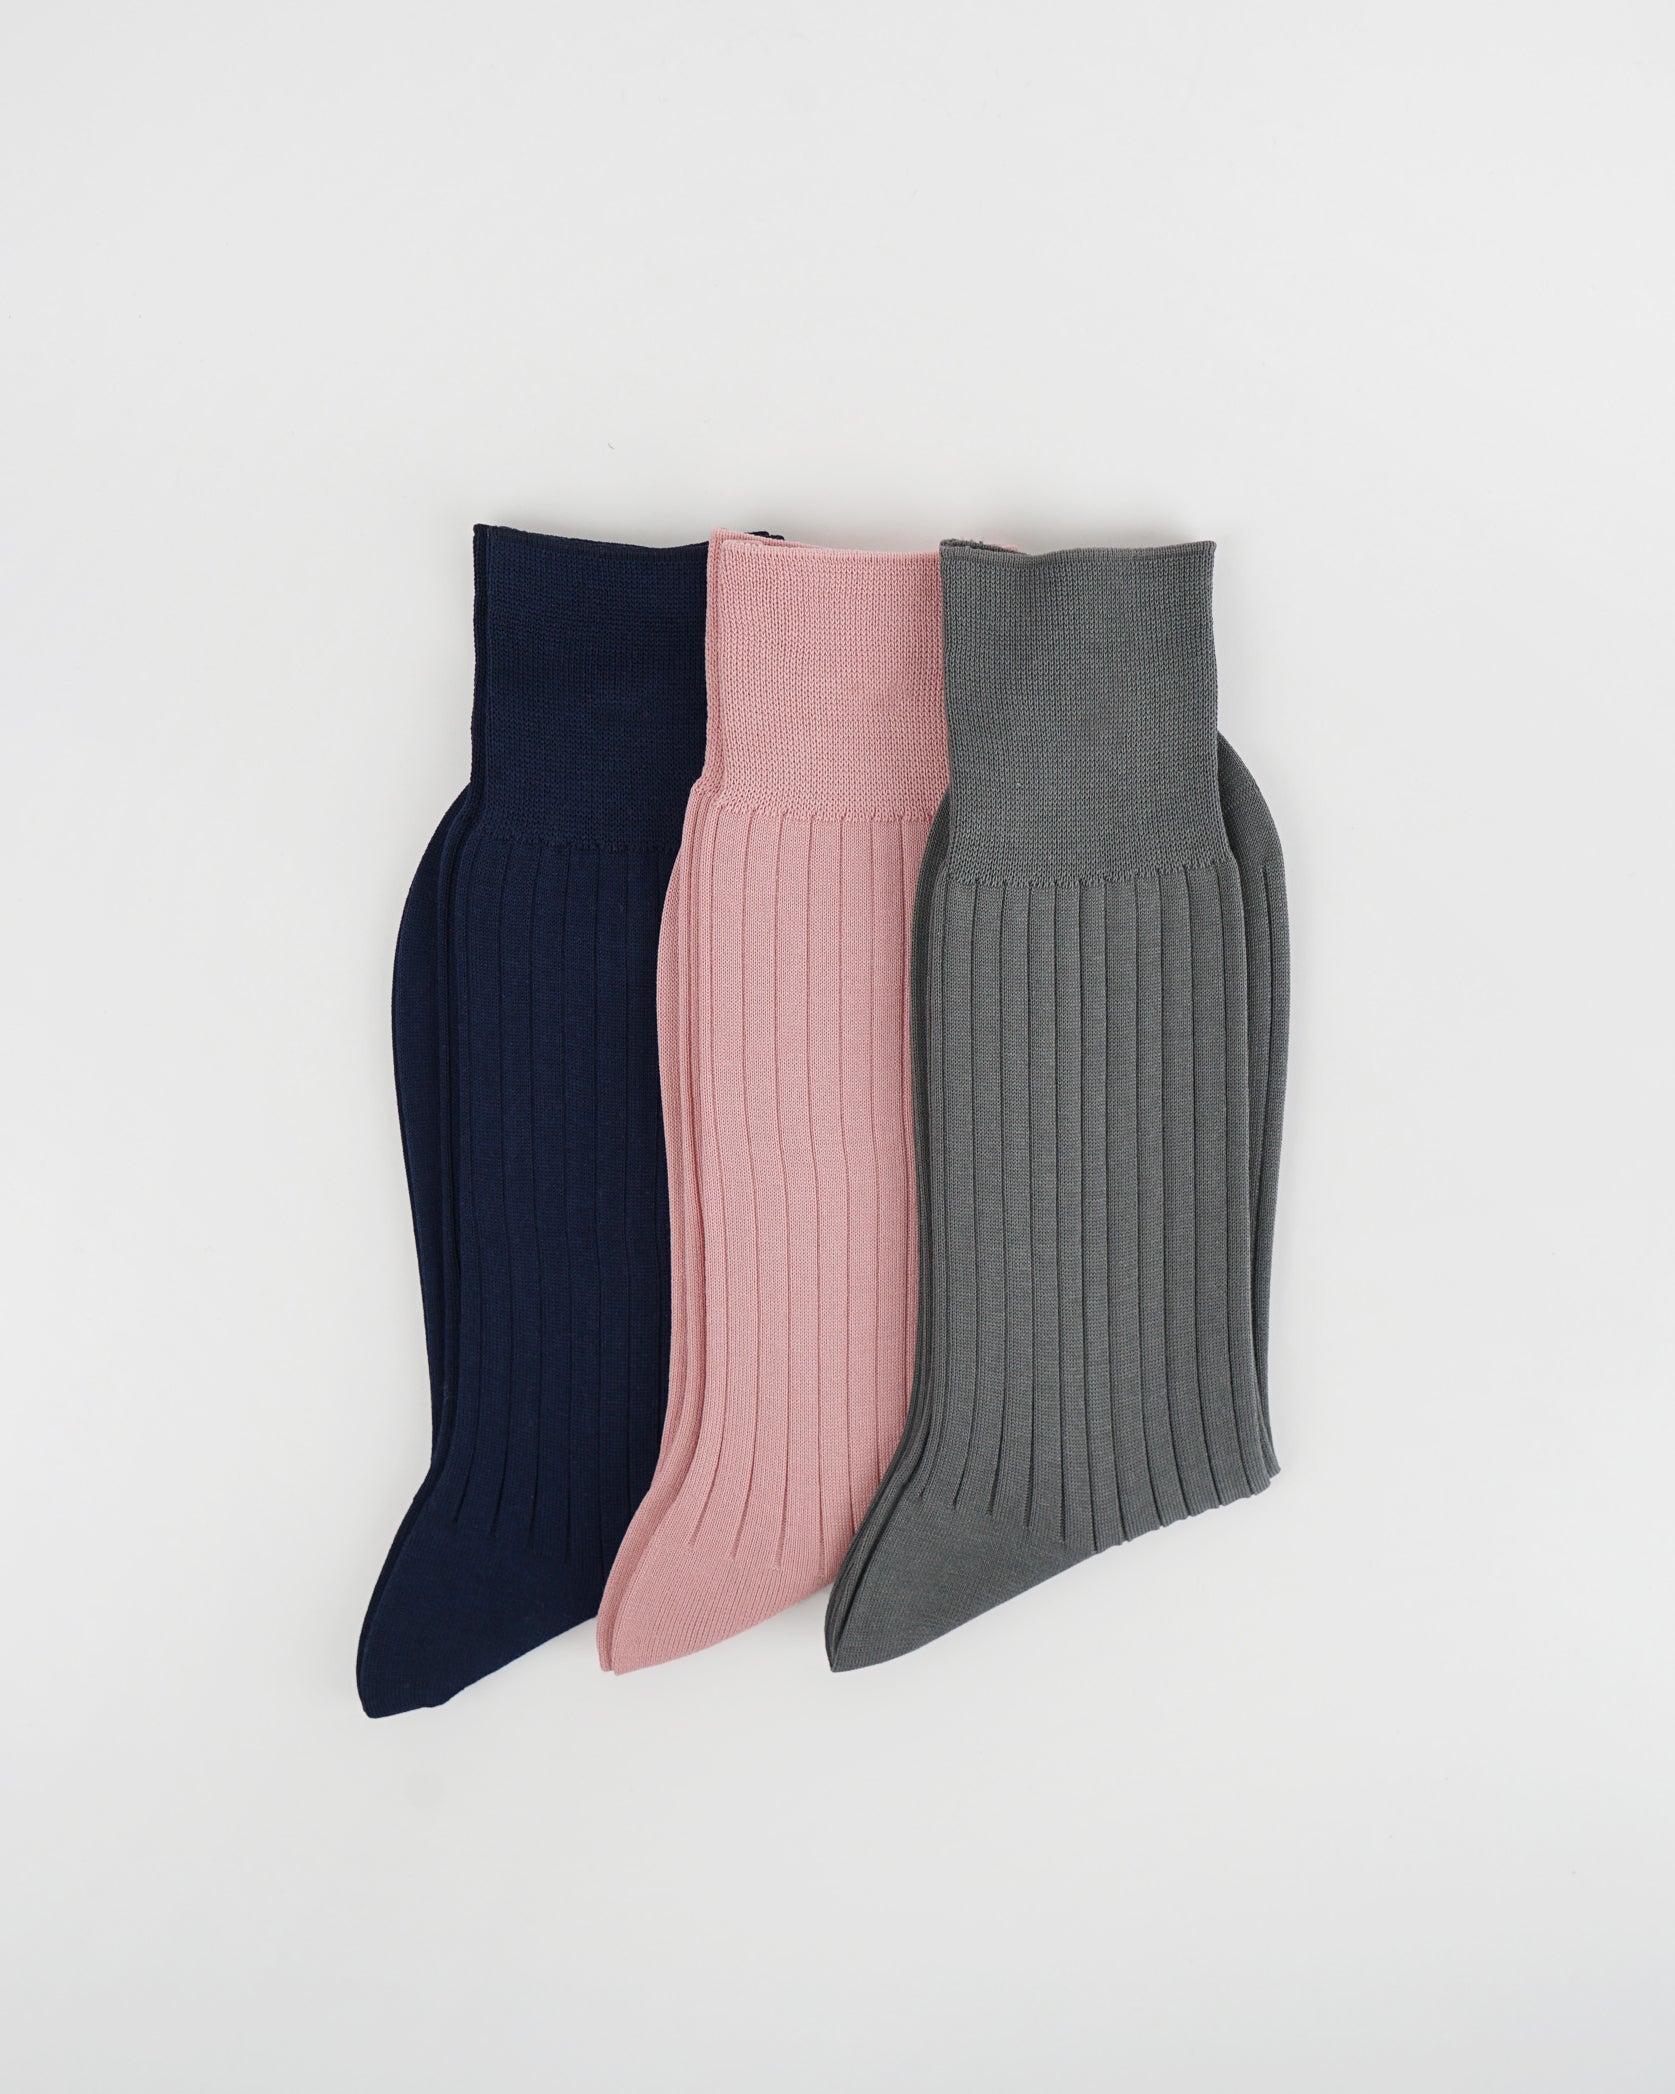 Dress Socks Set / Navy Pink Gray